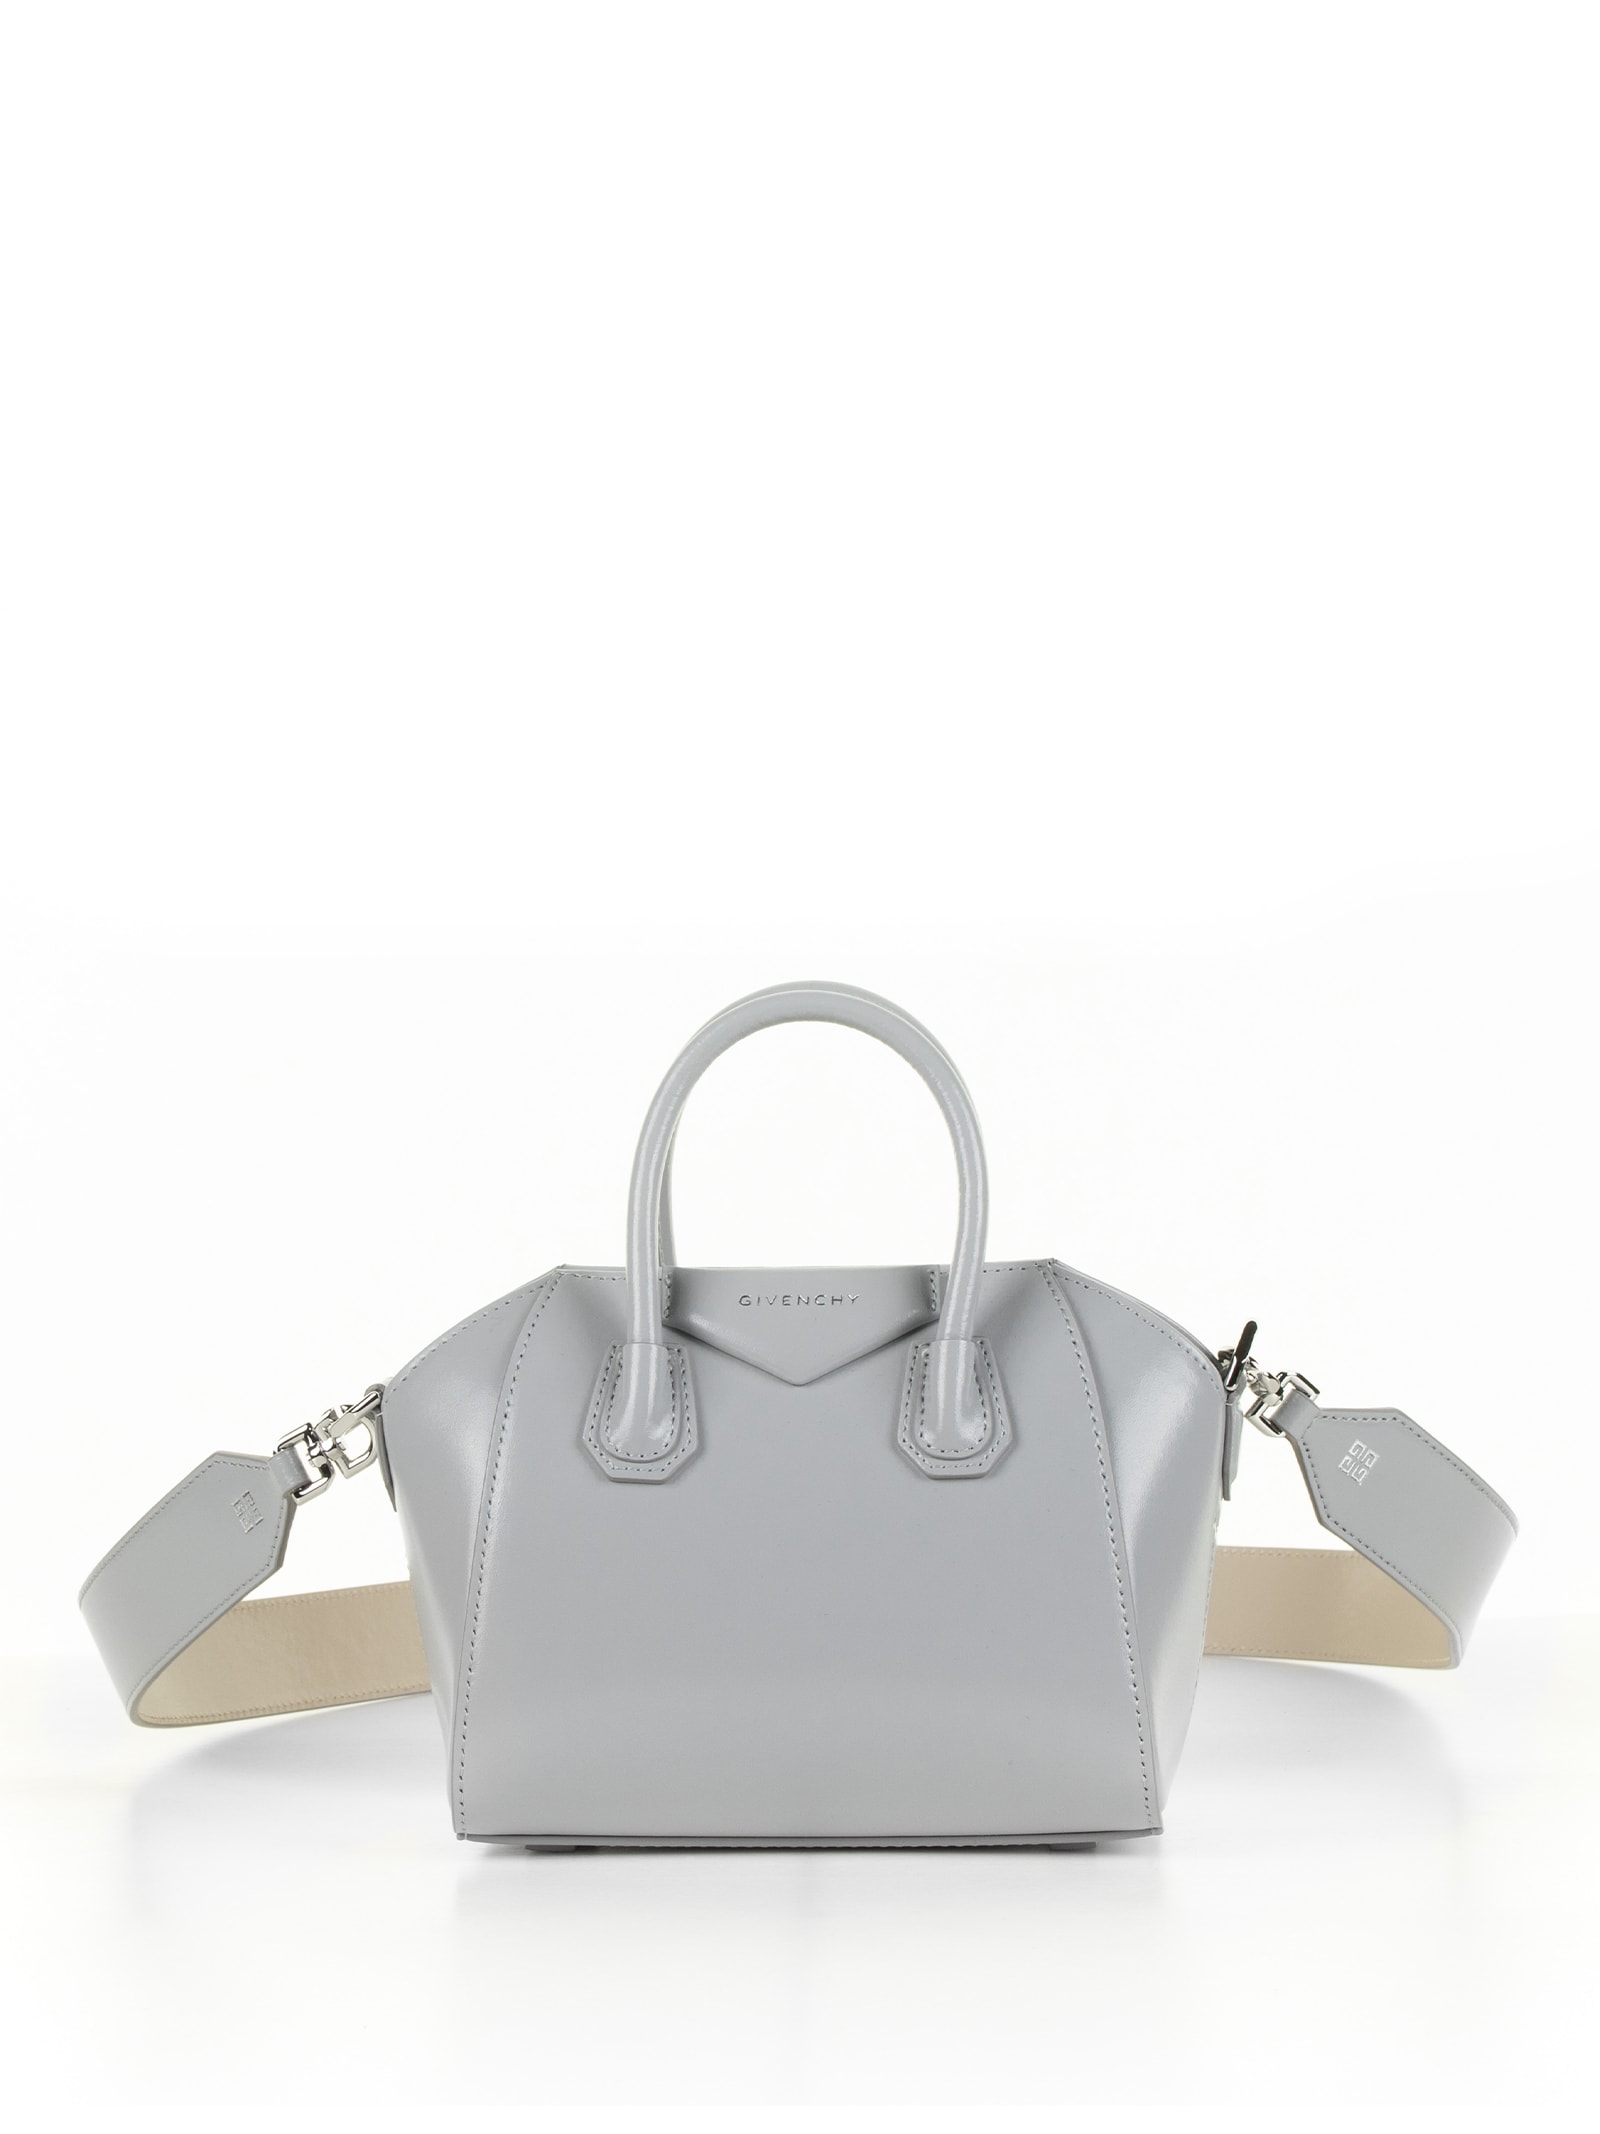 Givenchy Antigona Toy Bag In Leather Box In Light Grey Natura